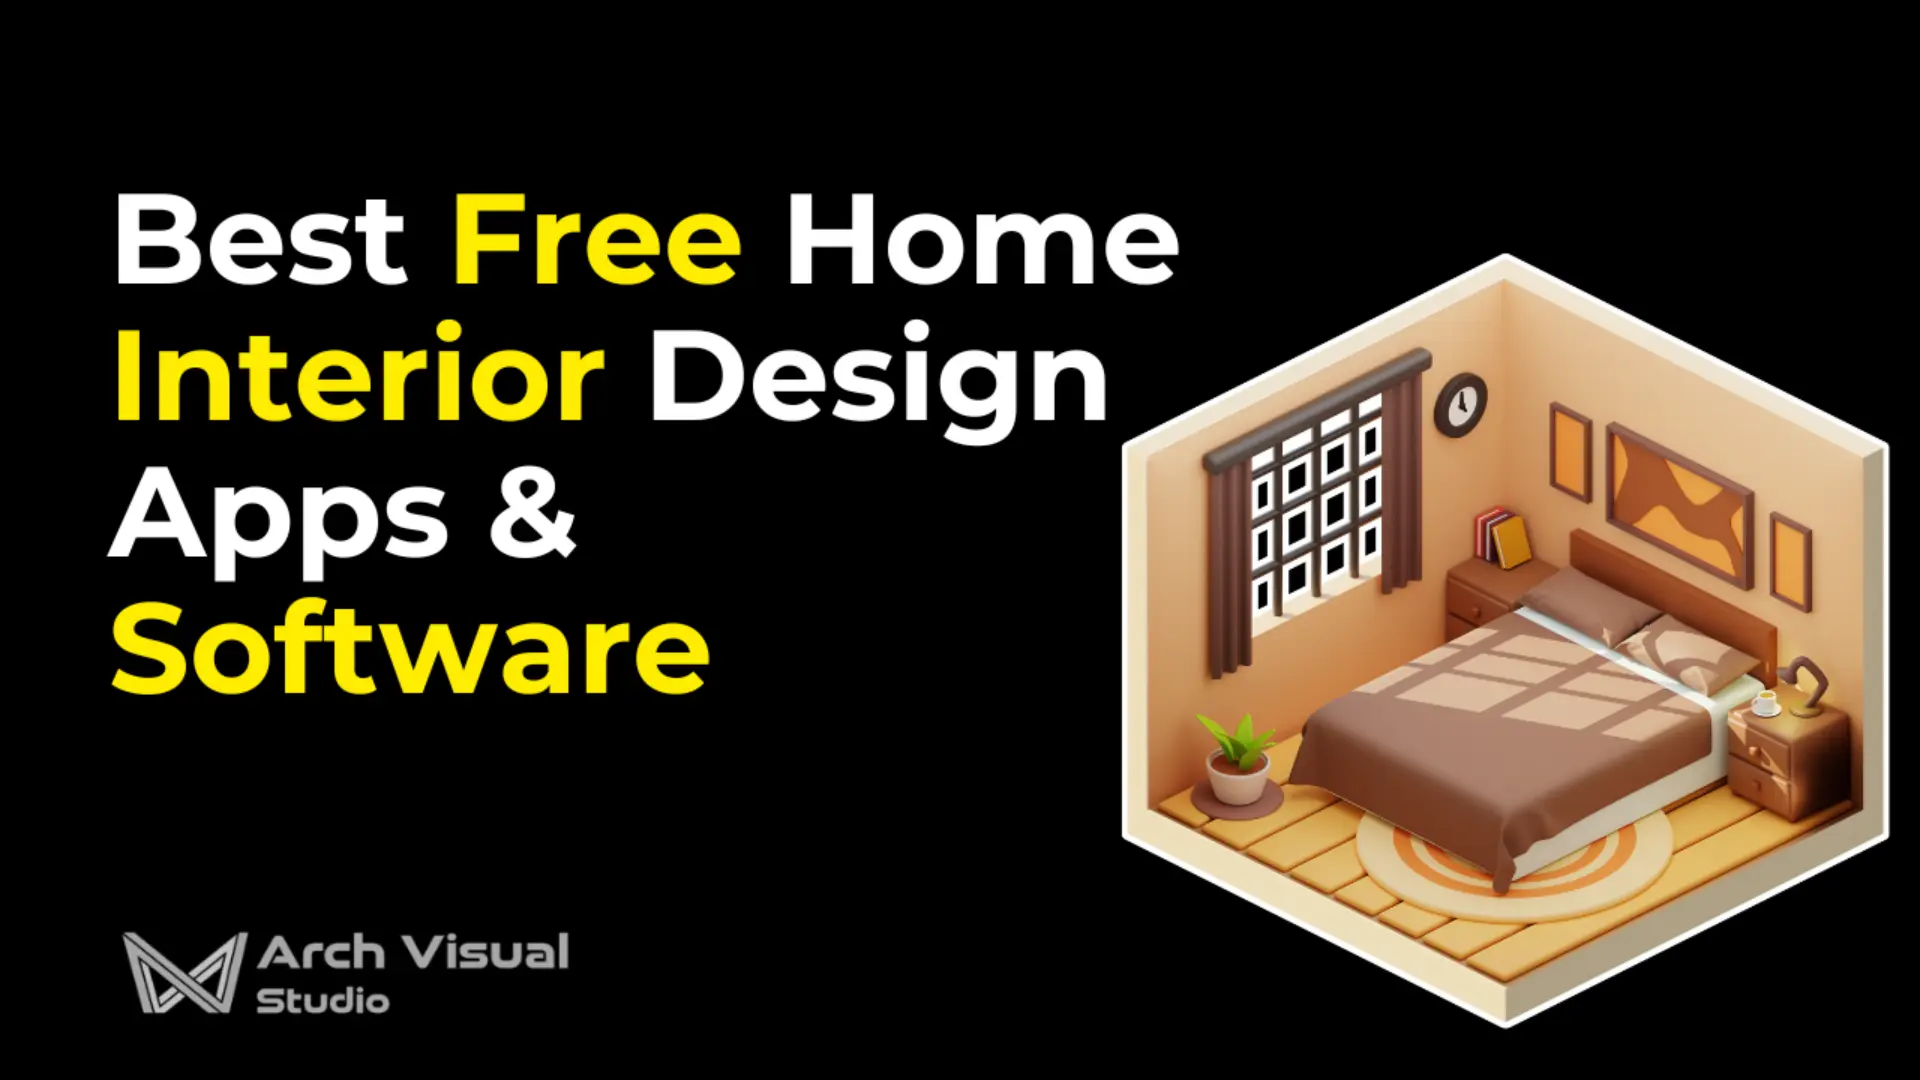 Best Free Home Interior Design Apps & Software